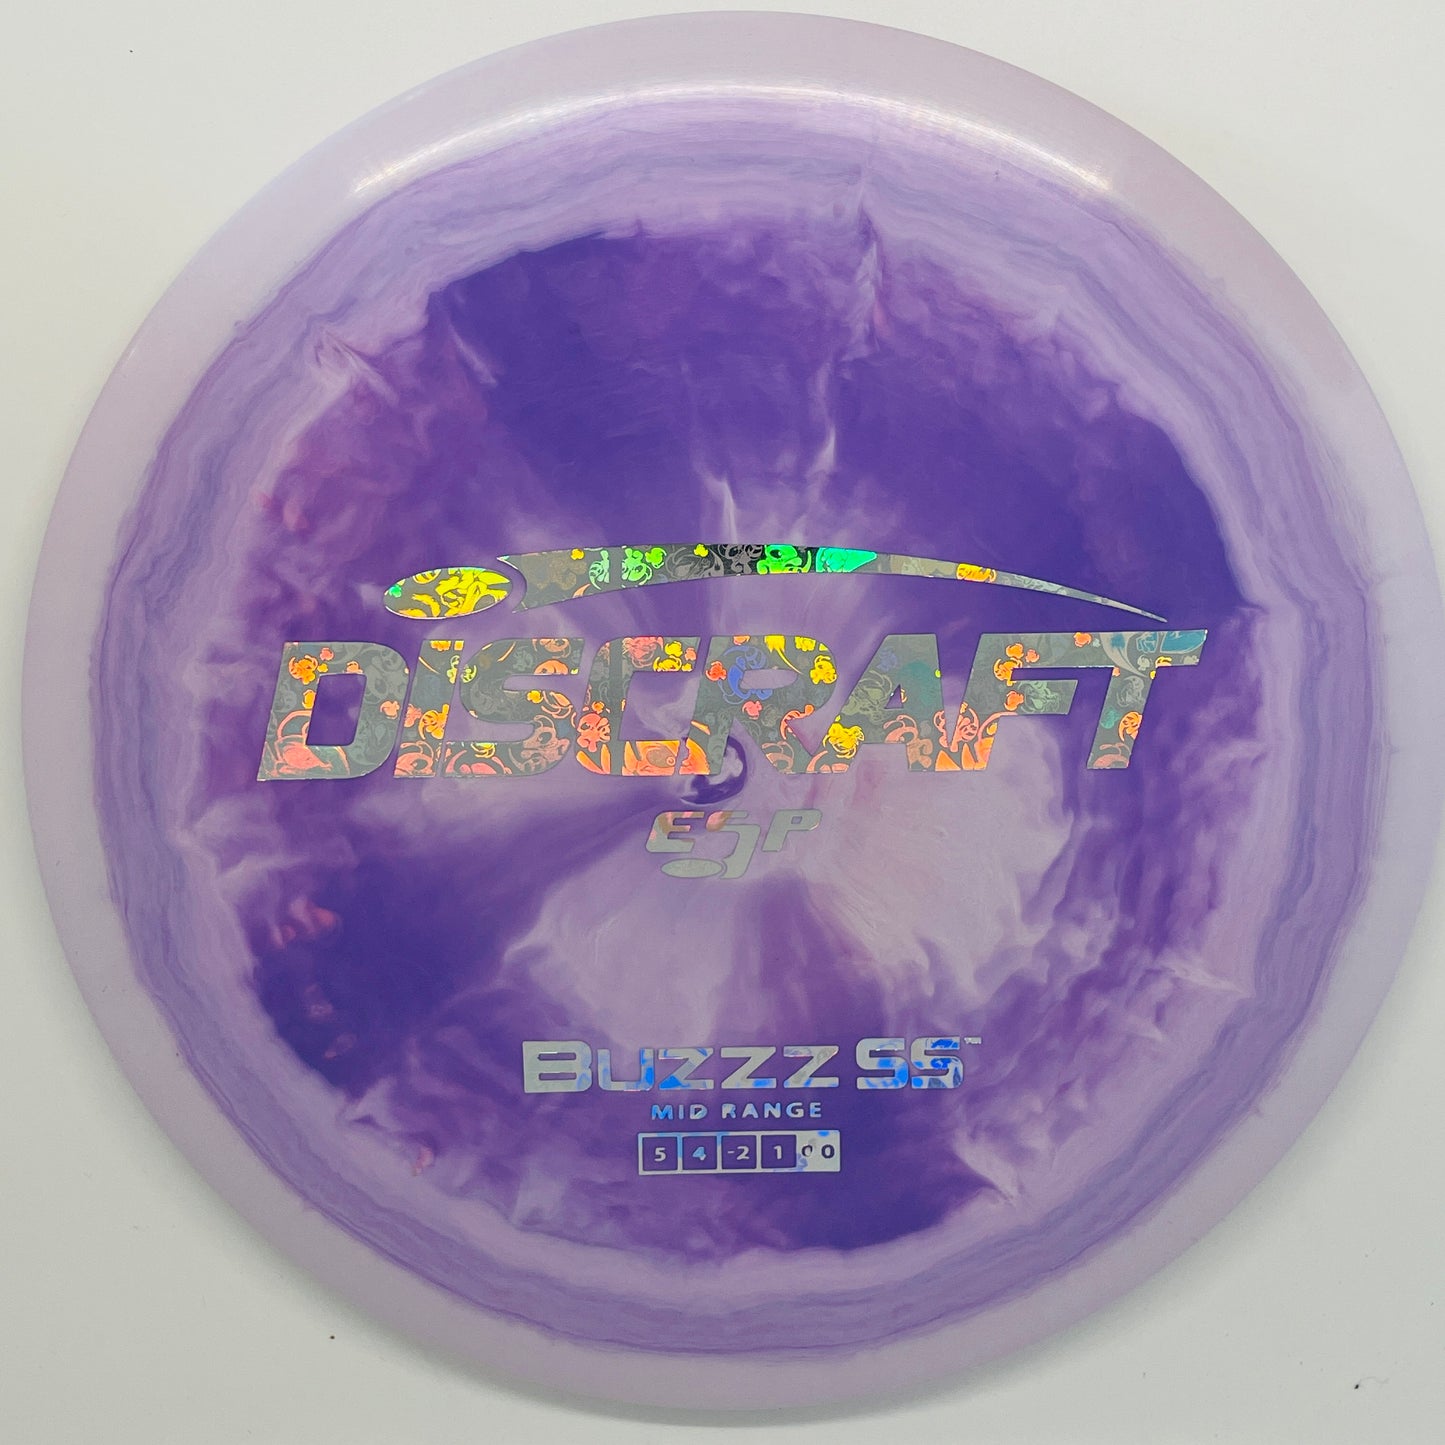 Discraft Buzzz SS ESP - Midrange